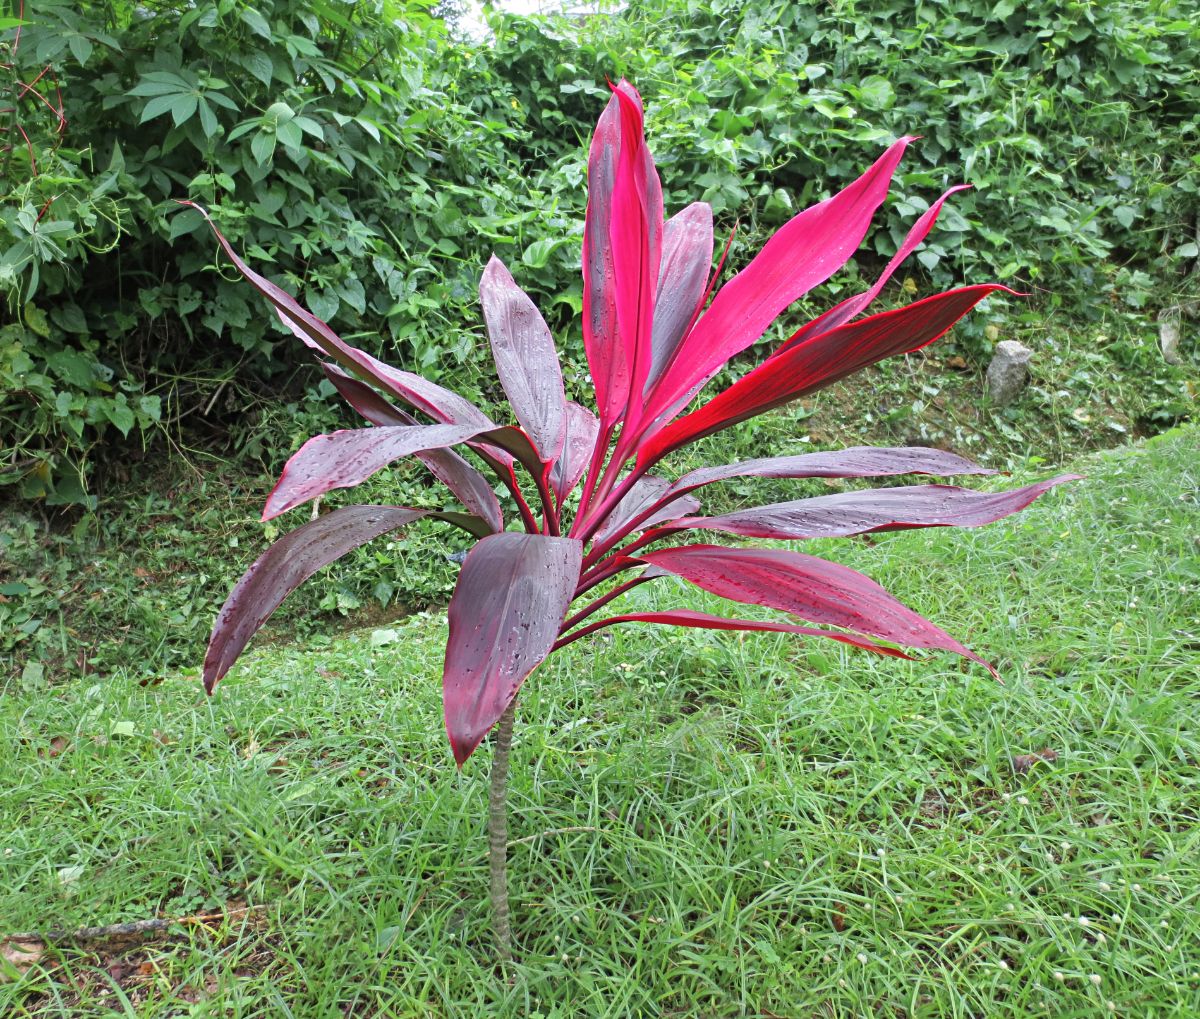 A beautiful red Ti Plant growing in a backyard.